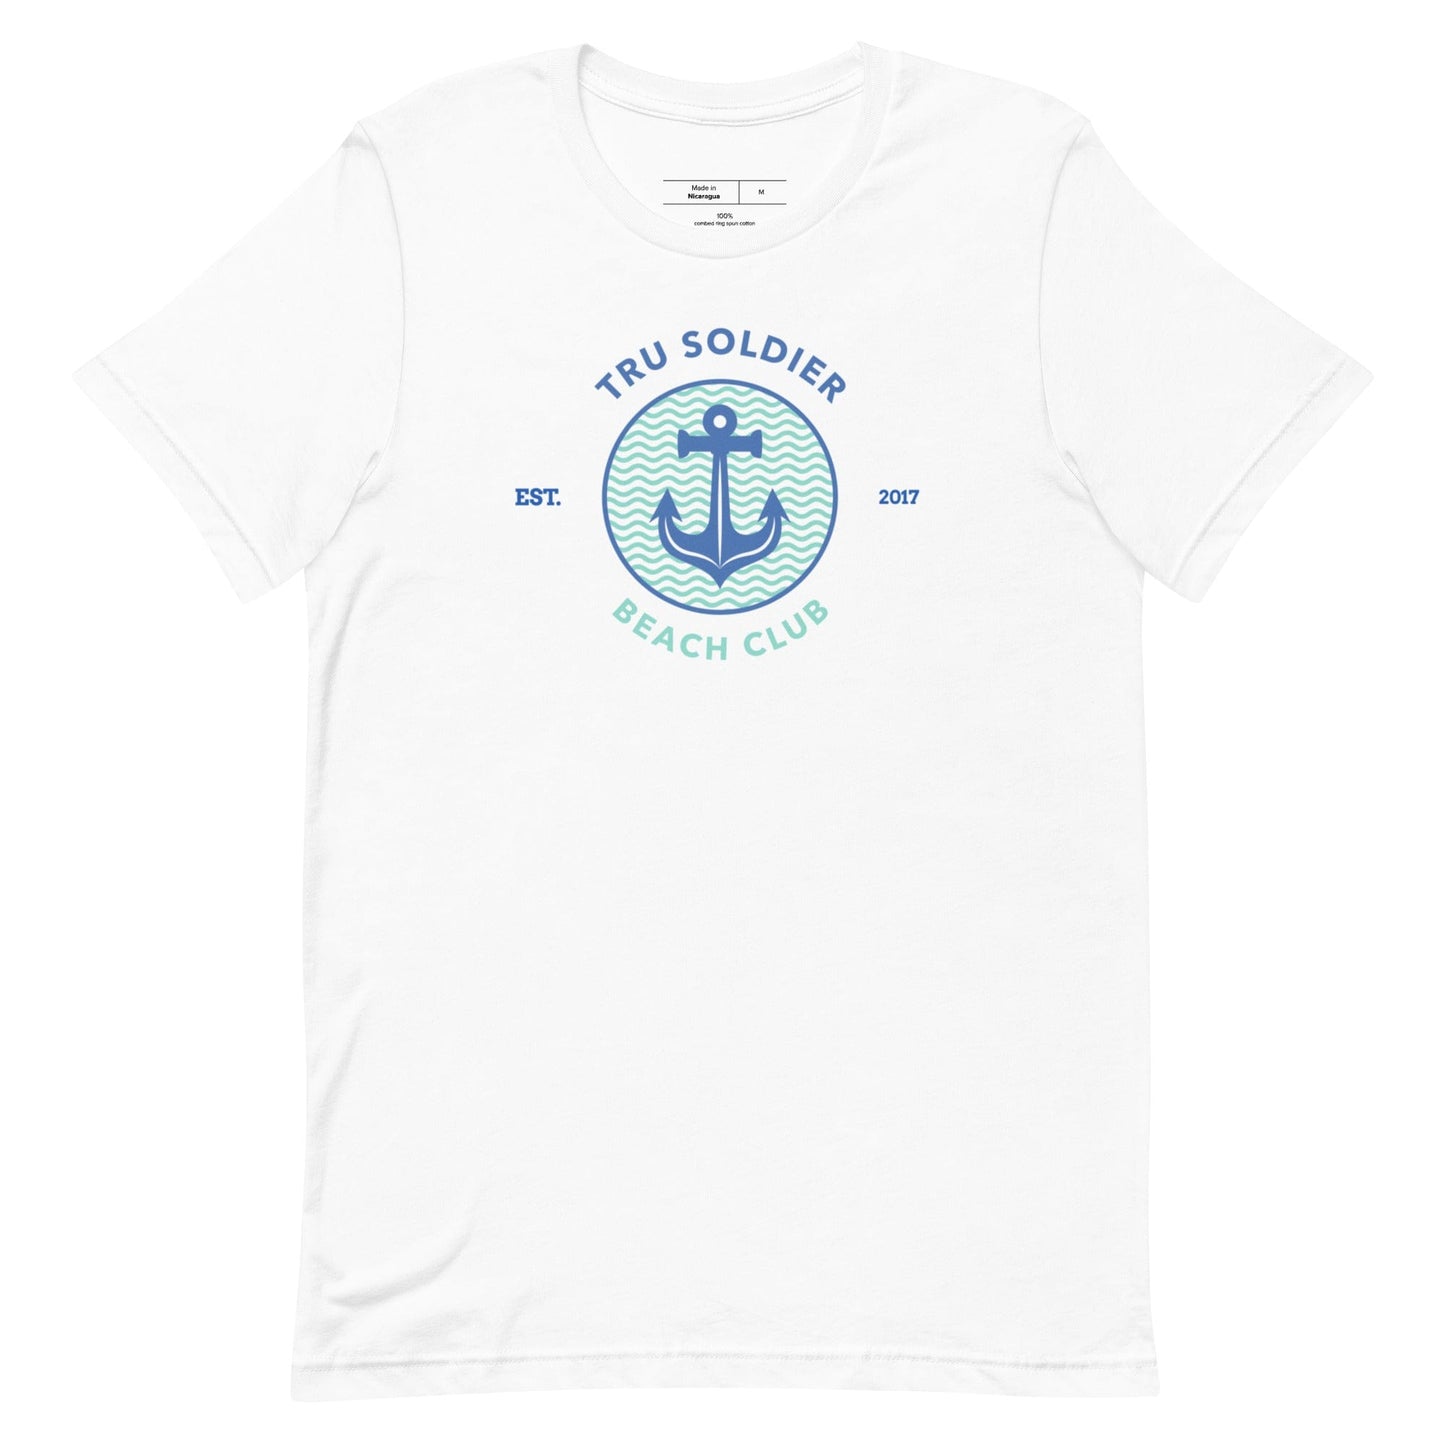 Tru Soldier Sportswear  White / XS Tru Soldier Beach Club t-shirt